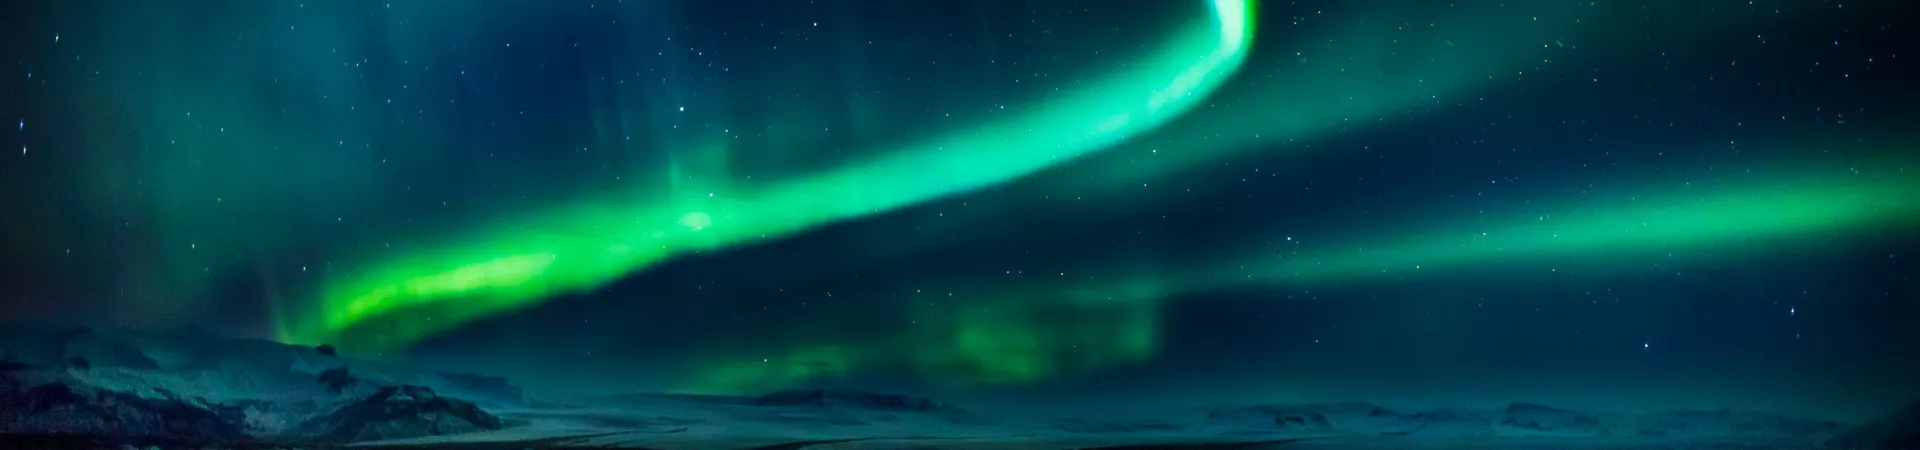 Aurora Borealis Or Northern Lights, Iceland